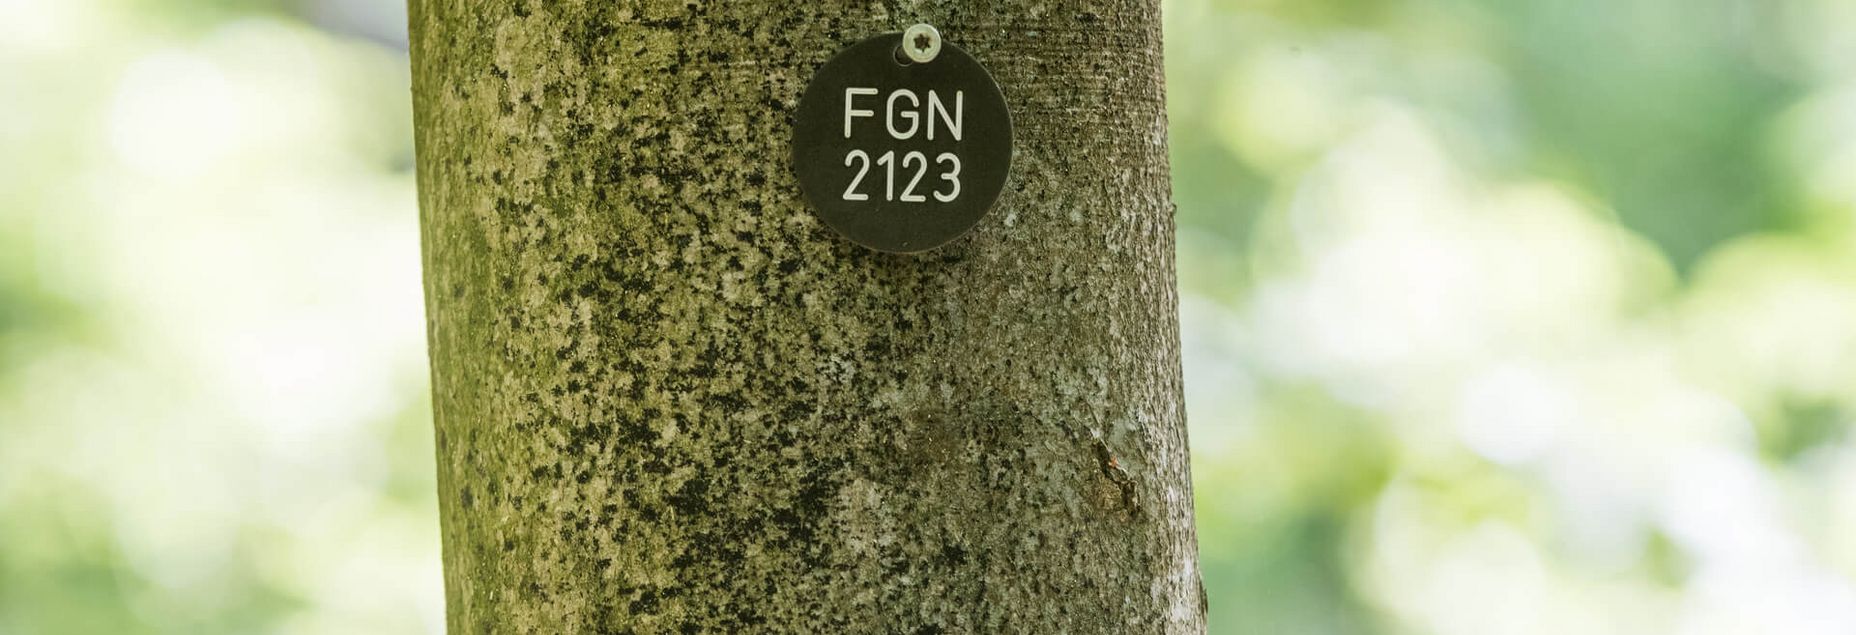 Baum FGN 2123- Plakette